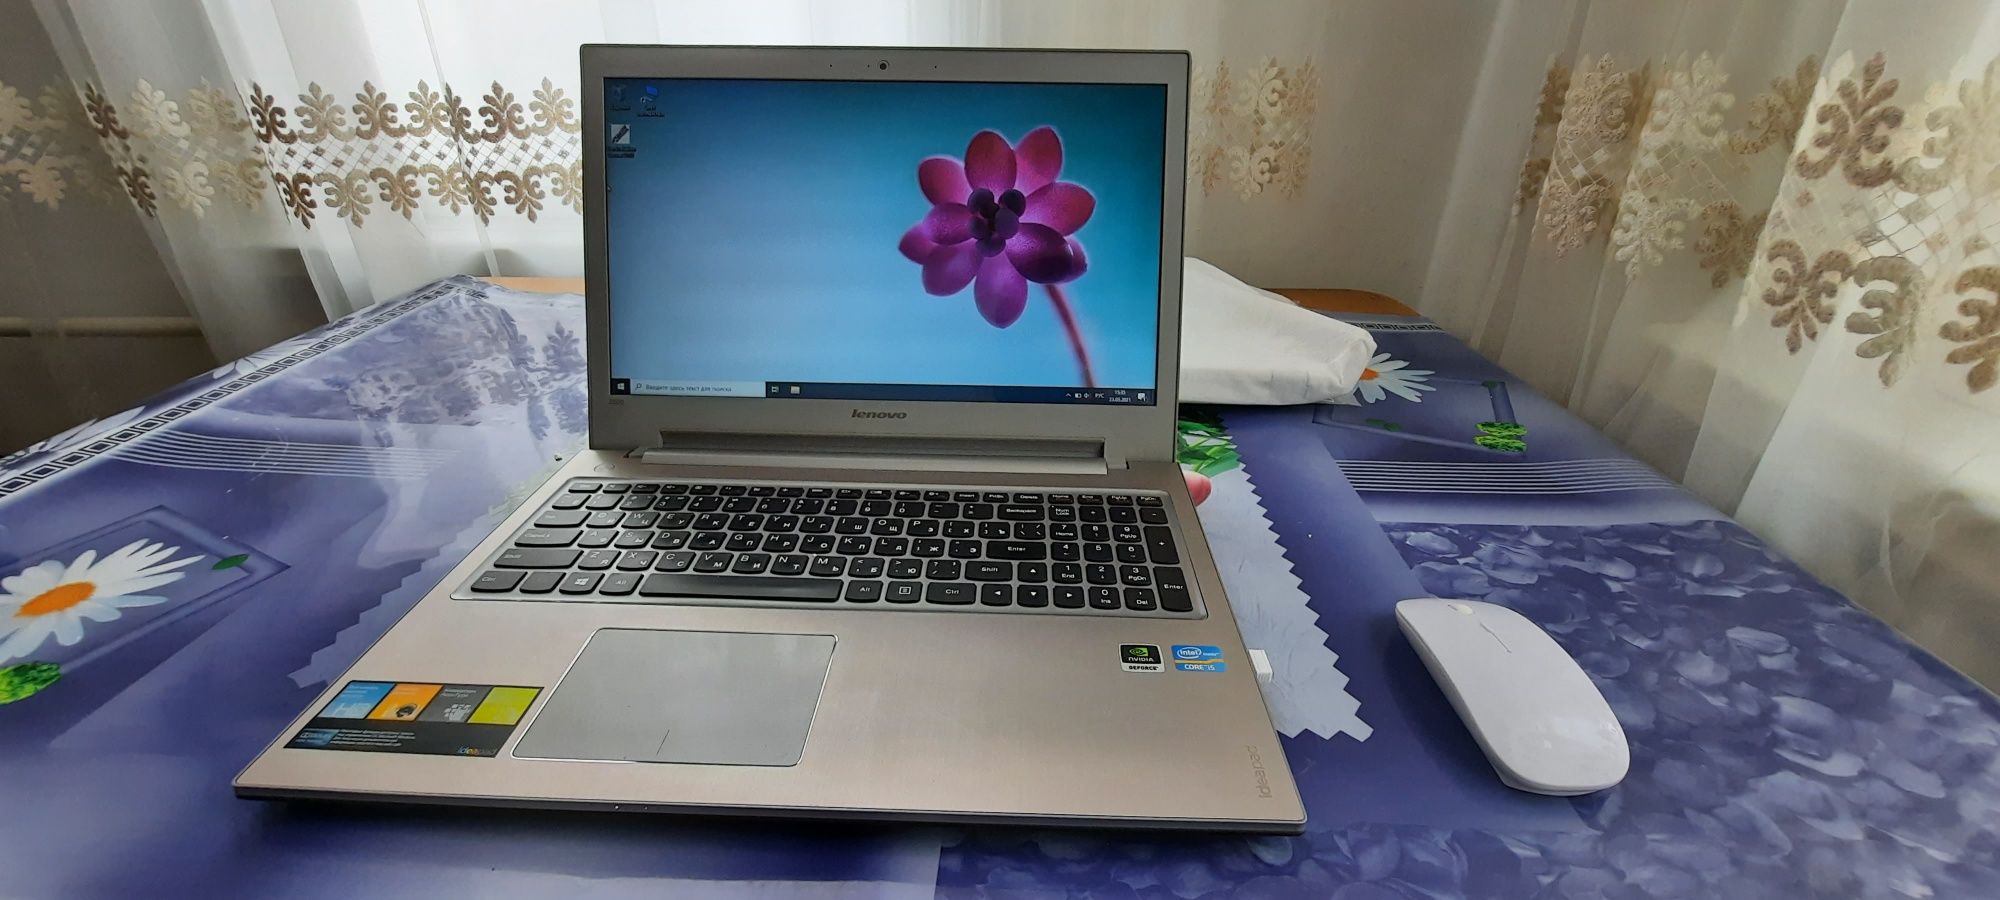 Игровой Ноутбук lenova Z500  Озу 16г видео 2Гб, SSD